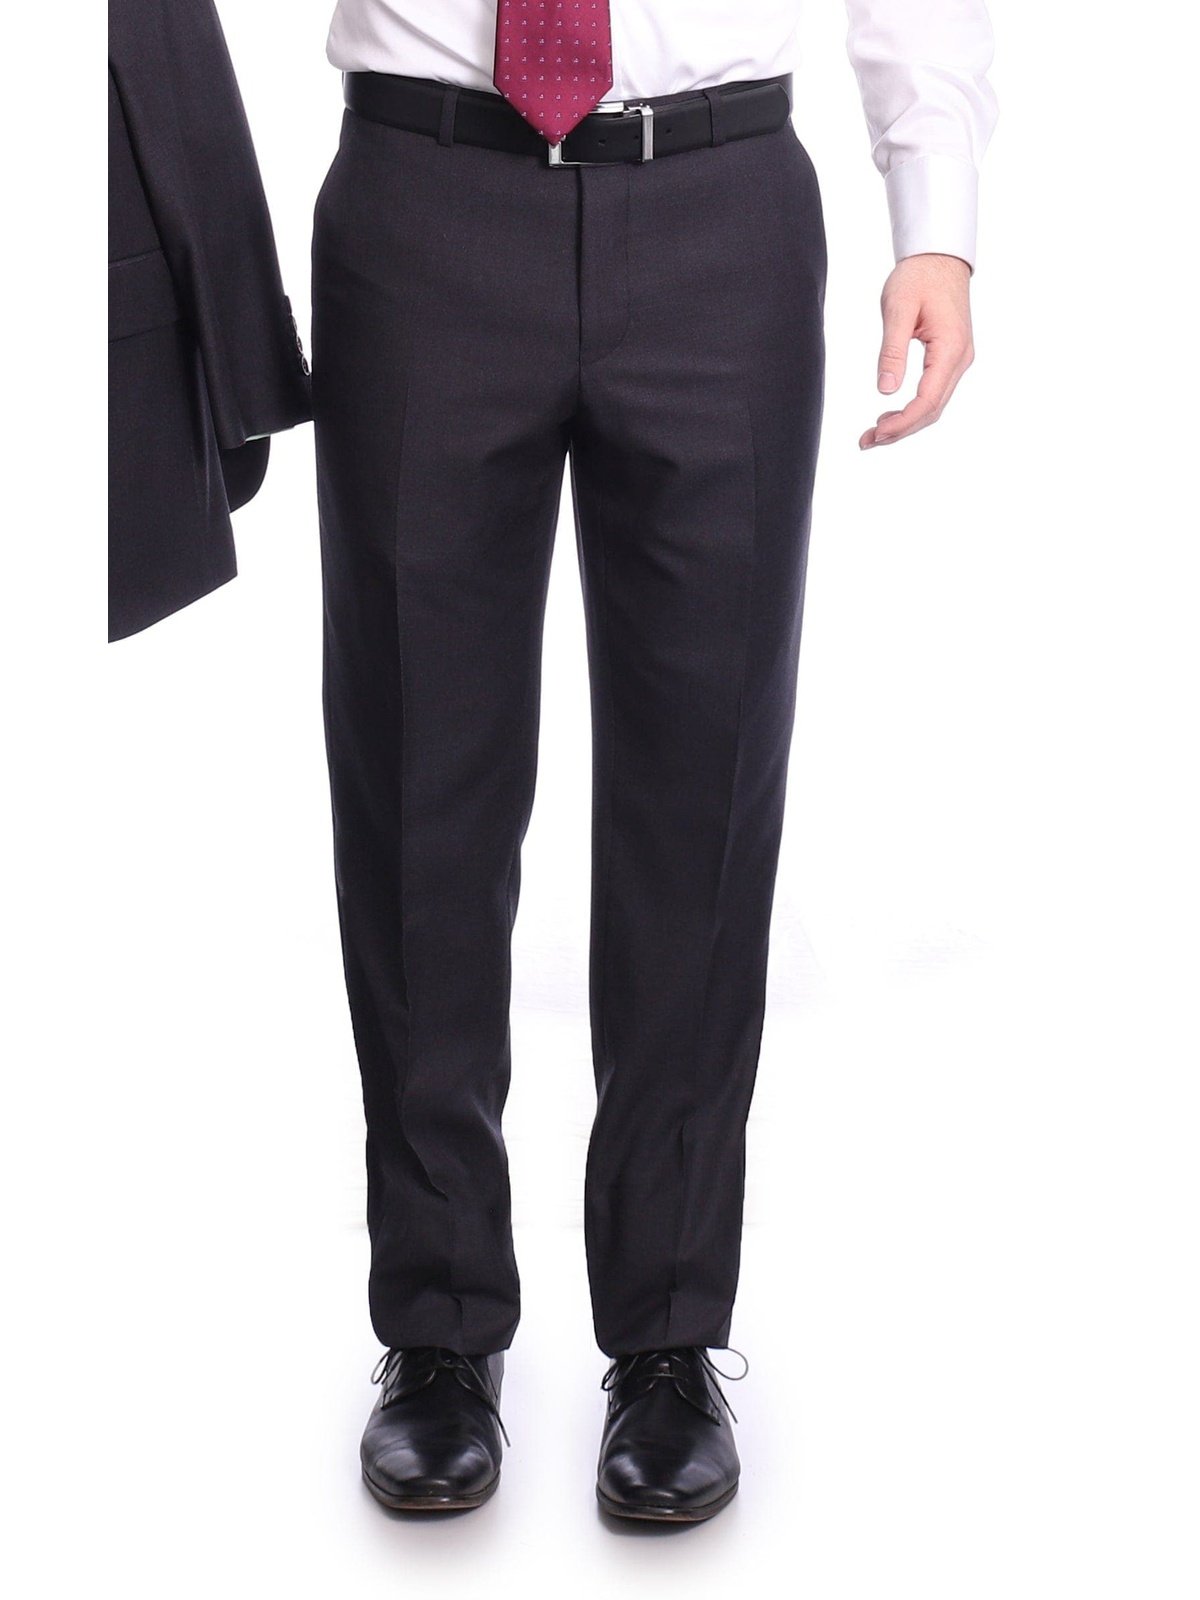 Raphael Bestselling Items Raphael Men's Regular Classic Fit Dark Gray 2 Button Mens Suit